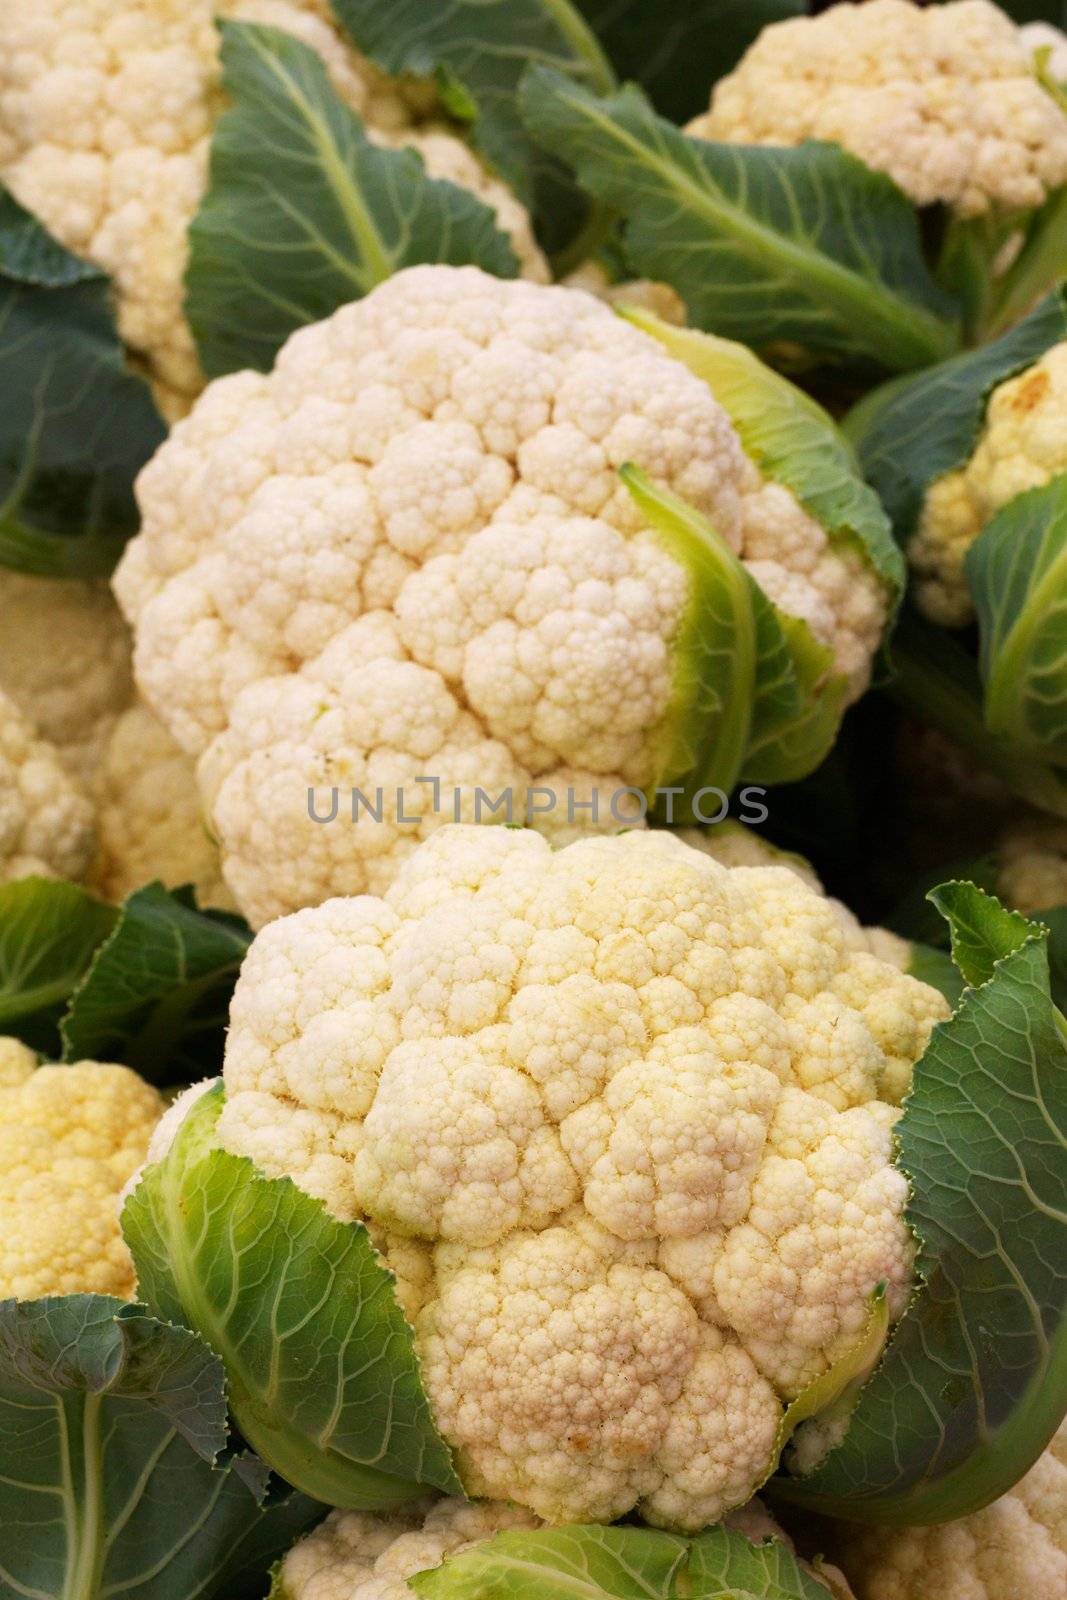 Pile of Cauliflower  by bobkeenan